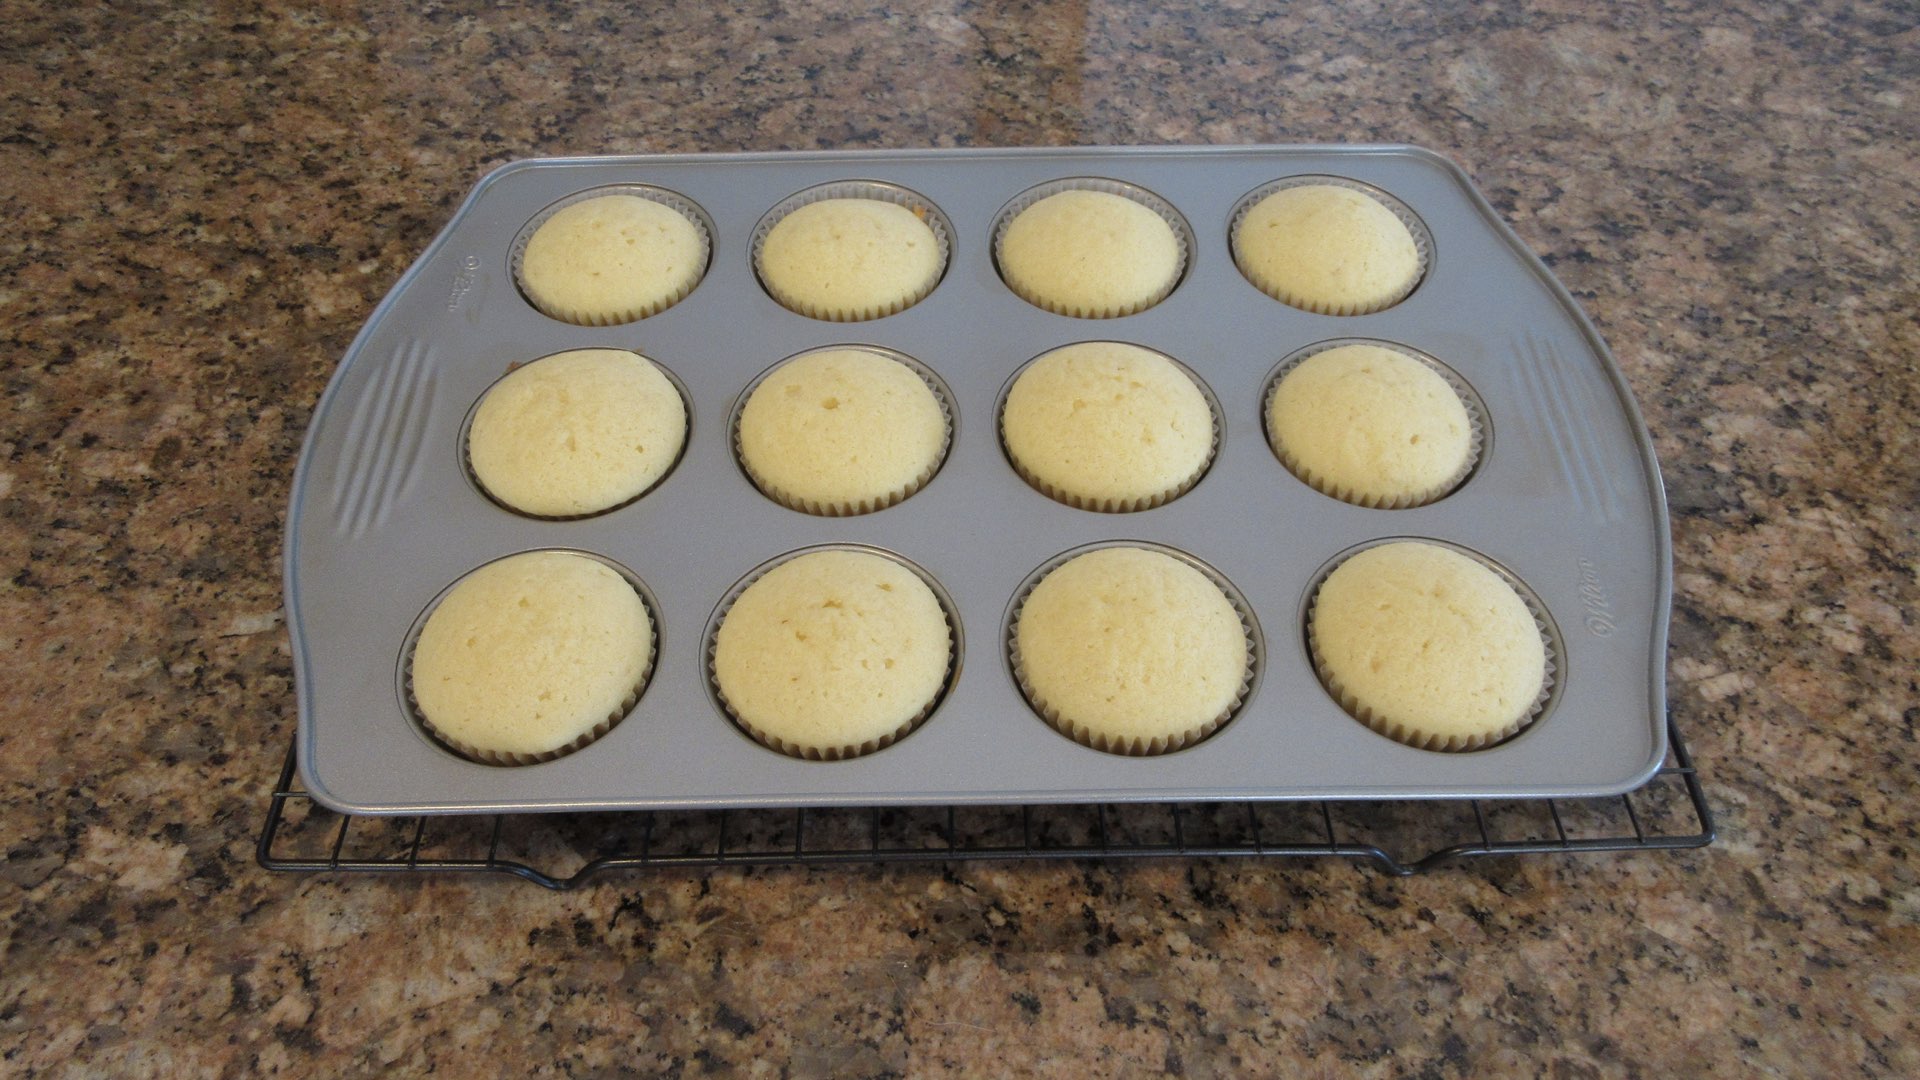 lemon cupcakes recipe